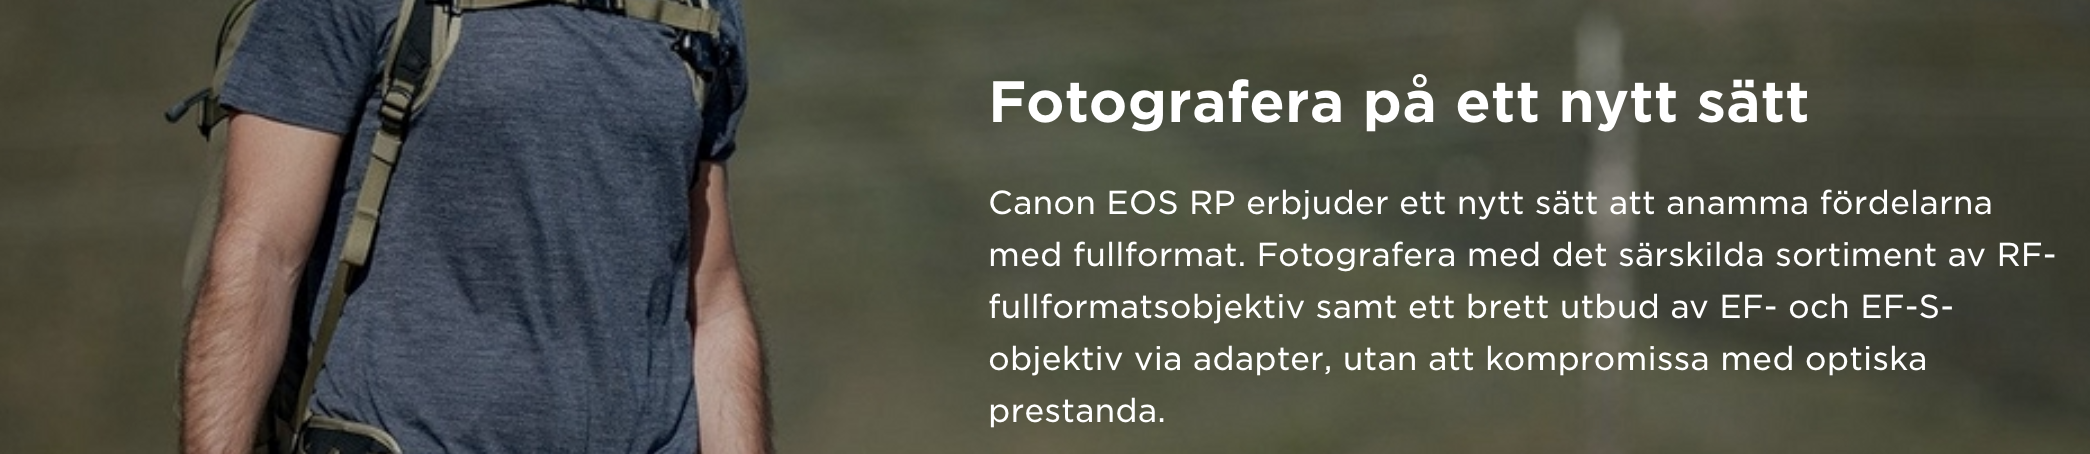 CanonEOSRP00011